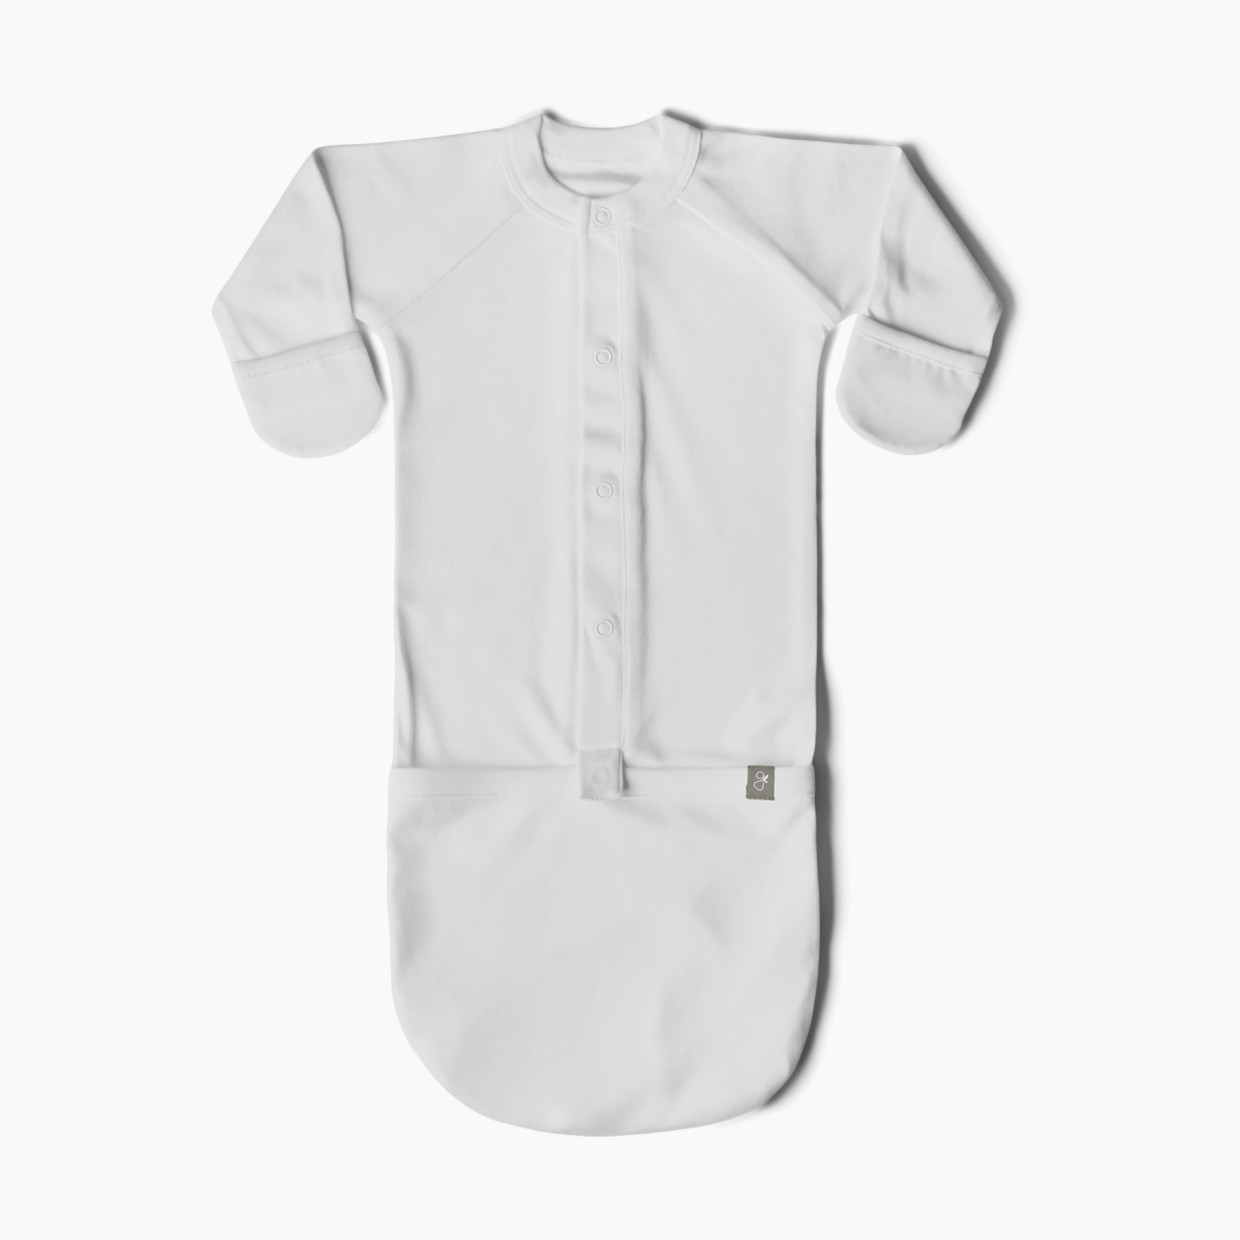 Goumi Kids 24hr Convertible Sleeper Baby Gown - Desert Mist, 3-6 M.